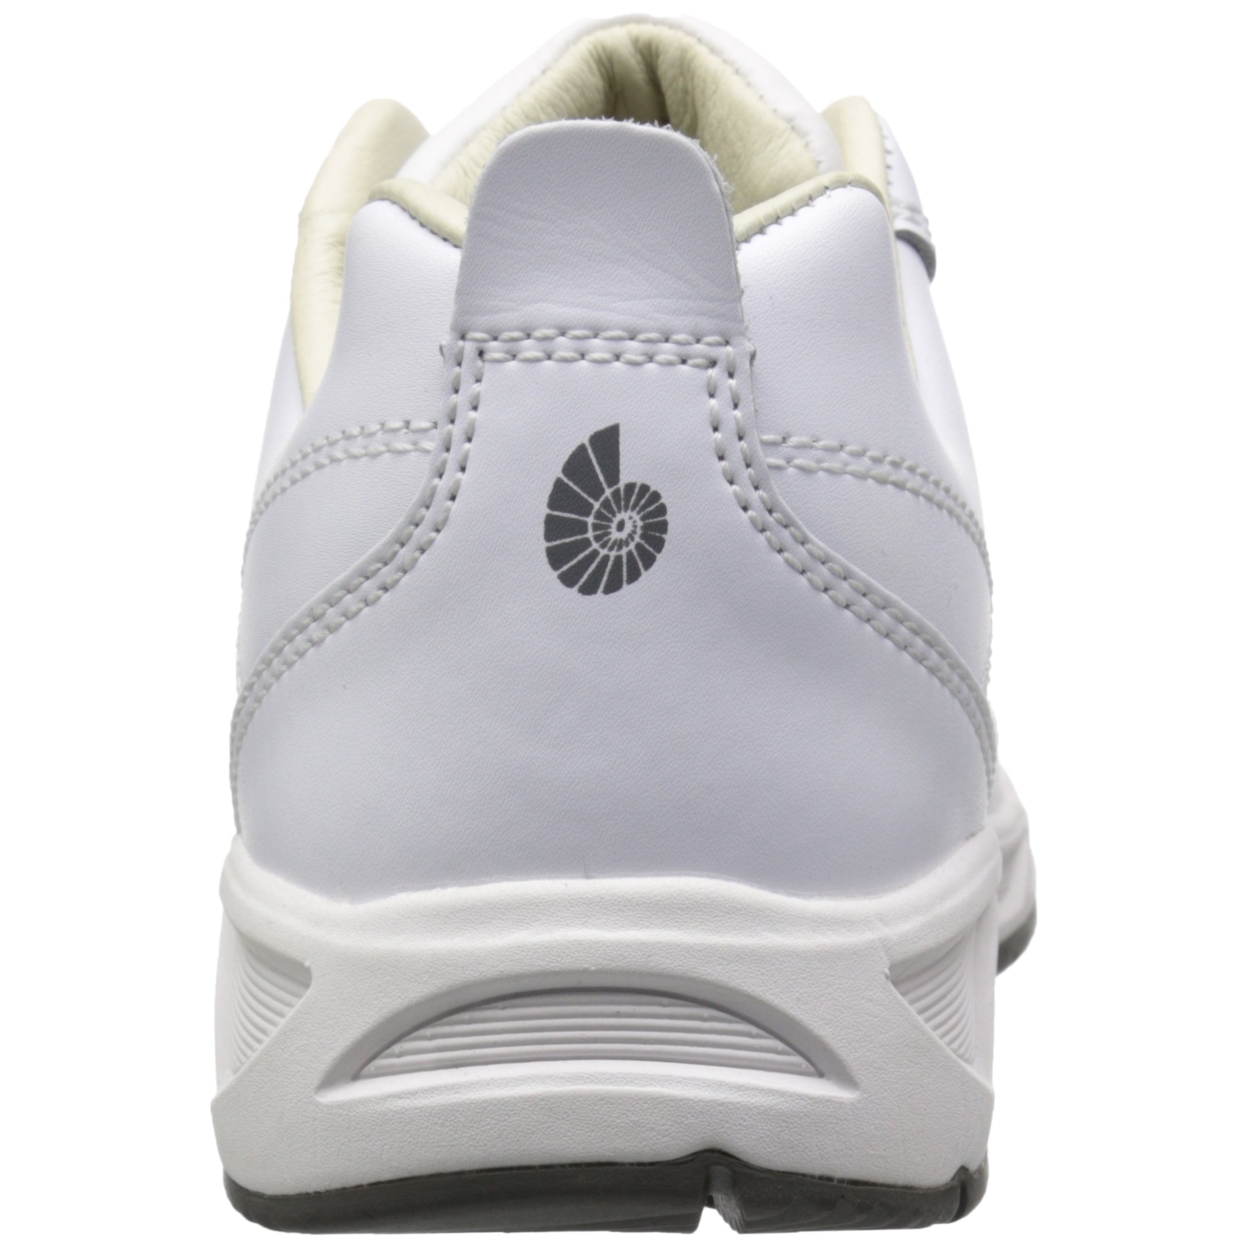 FSI FOOTWEAR SPECIALTIES INTERNATIONAL NAUTILUS Nautilus 4046 ESD No Exposed Metal Soft Toe Clean Room Athletic Shoe WHITE - WHITE, 5.5-W